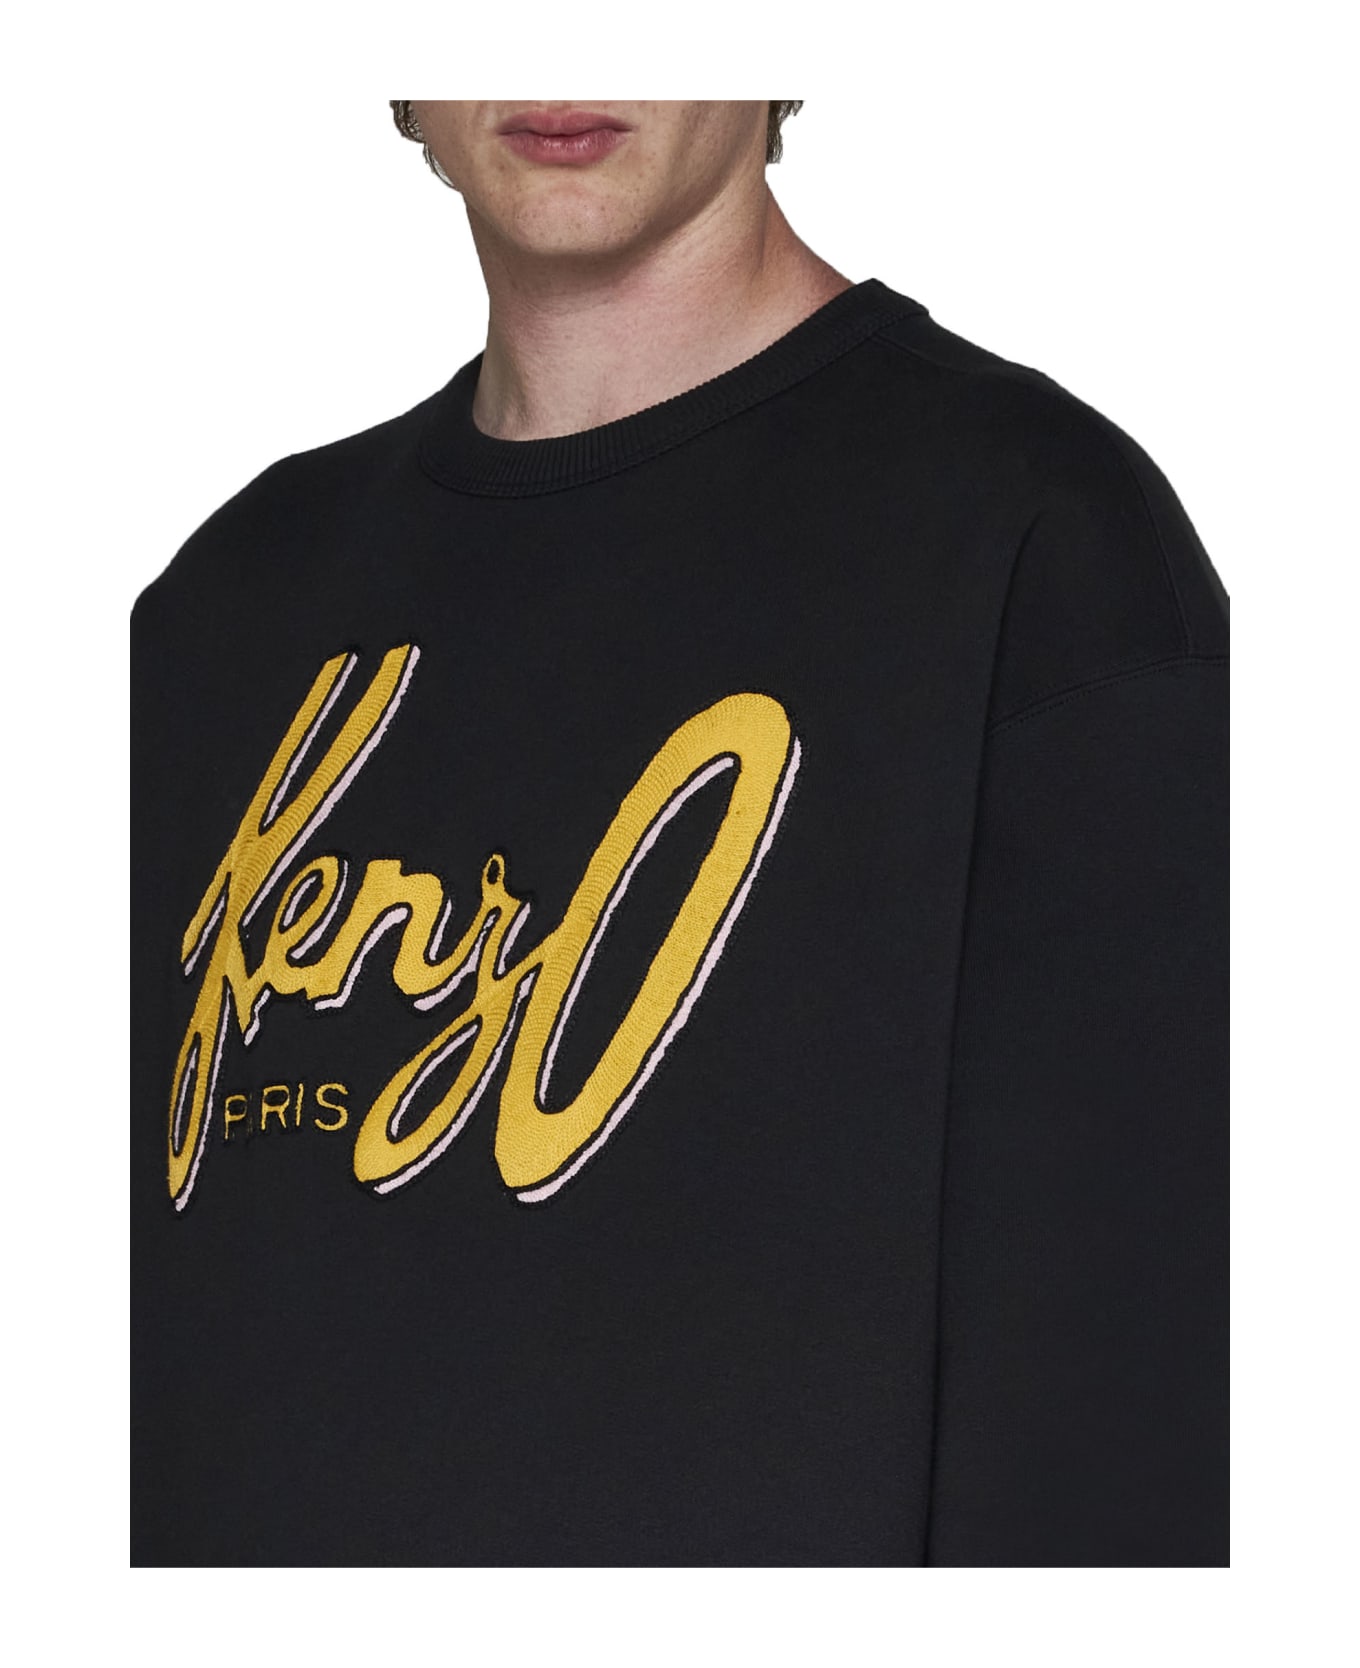 Kenzo Archive Logo Sweatshirt - J Black フリース